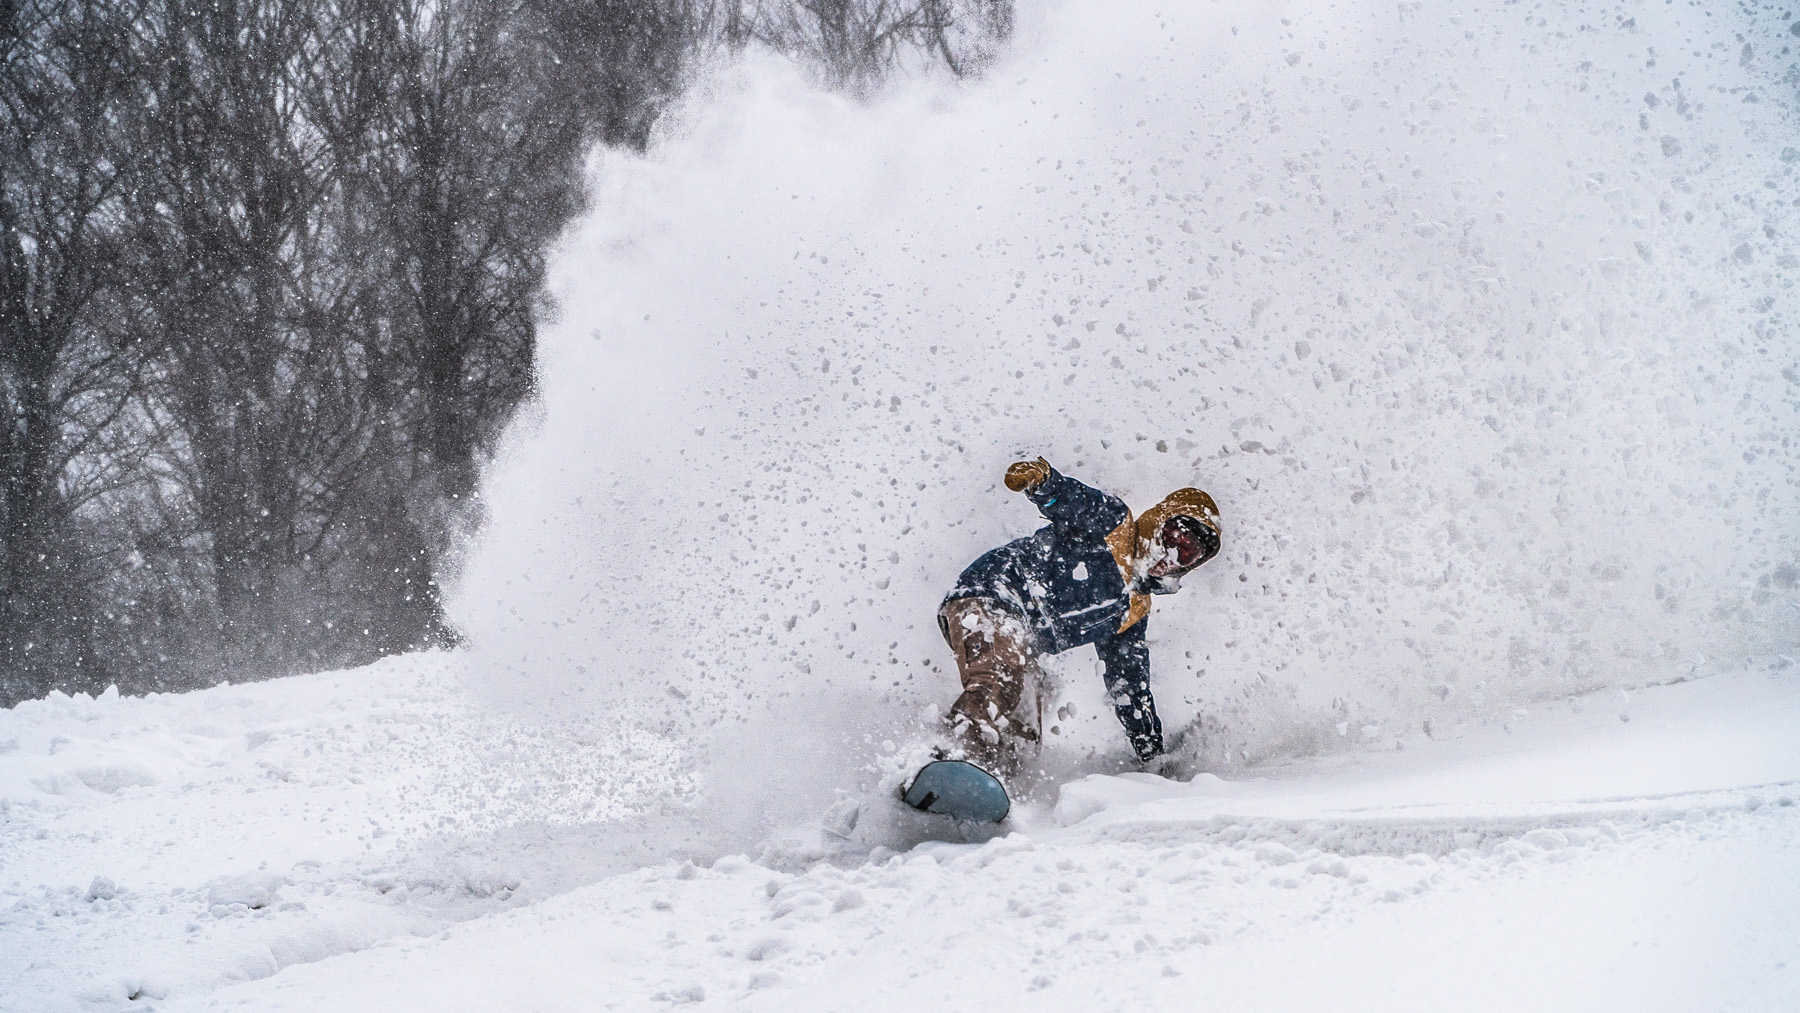 snowboarding in deep powder madarao